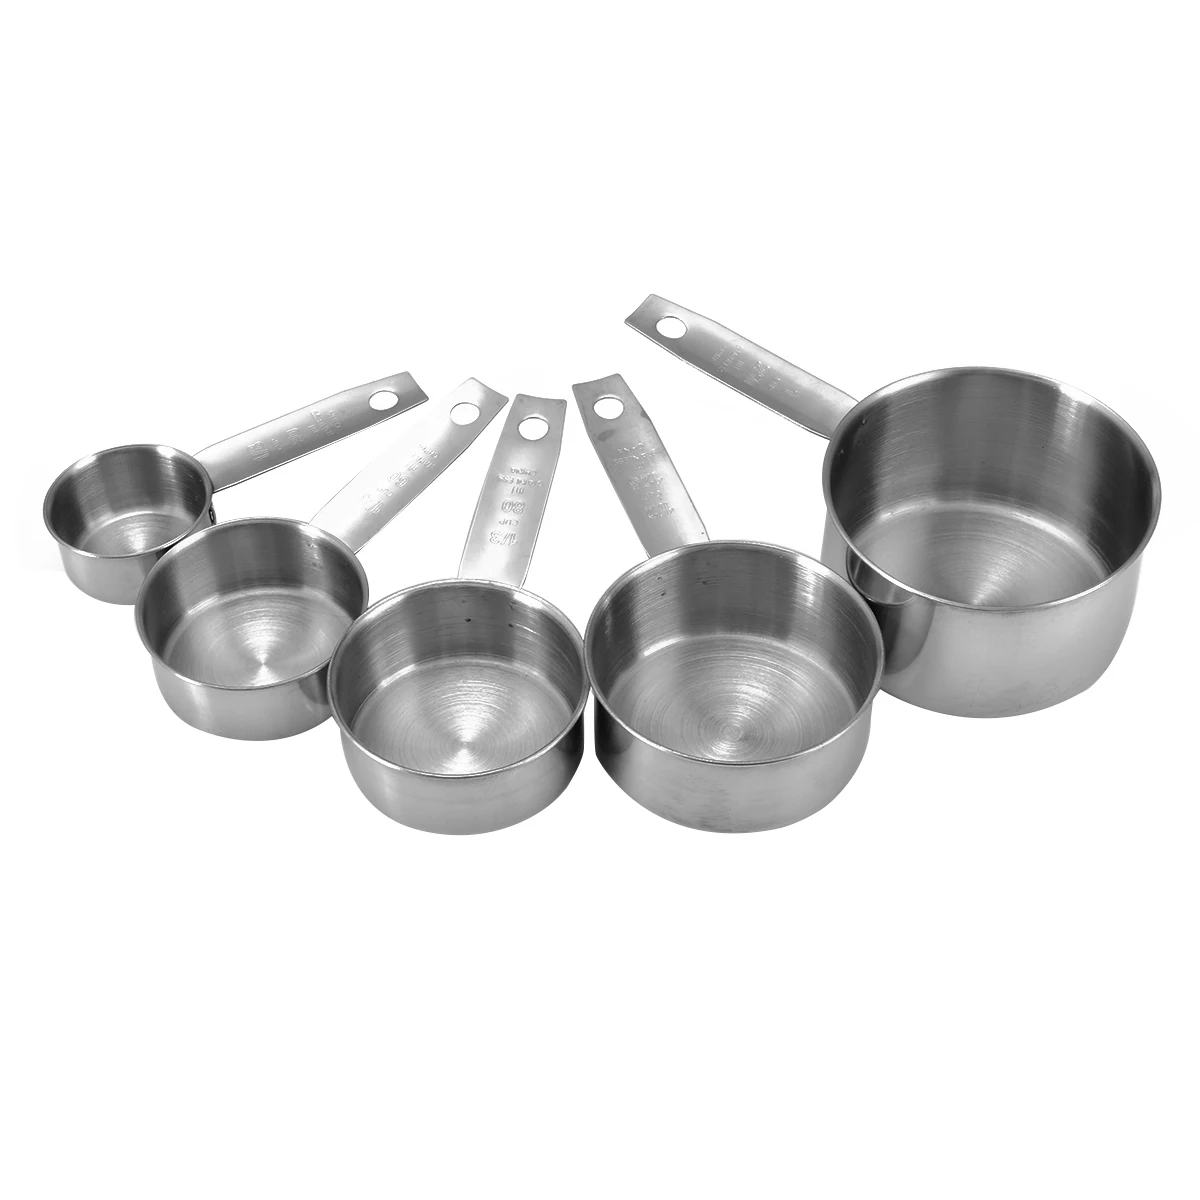 https://ae01.alicdn.com/kf/HTB1J1eBbeP2gK0jSZFoq6yuIVXa8/5pcs-Baking-Measuring-Cups-Spoons-Kit-Stainless-Steel-Flour-Liquid-Measuring-Spoons-Kitchen-Baking-Cooking-Scaled.jpg